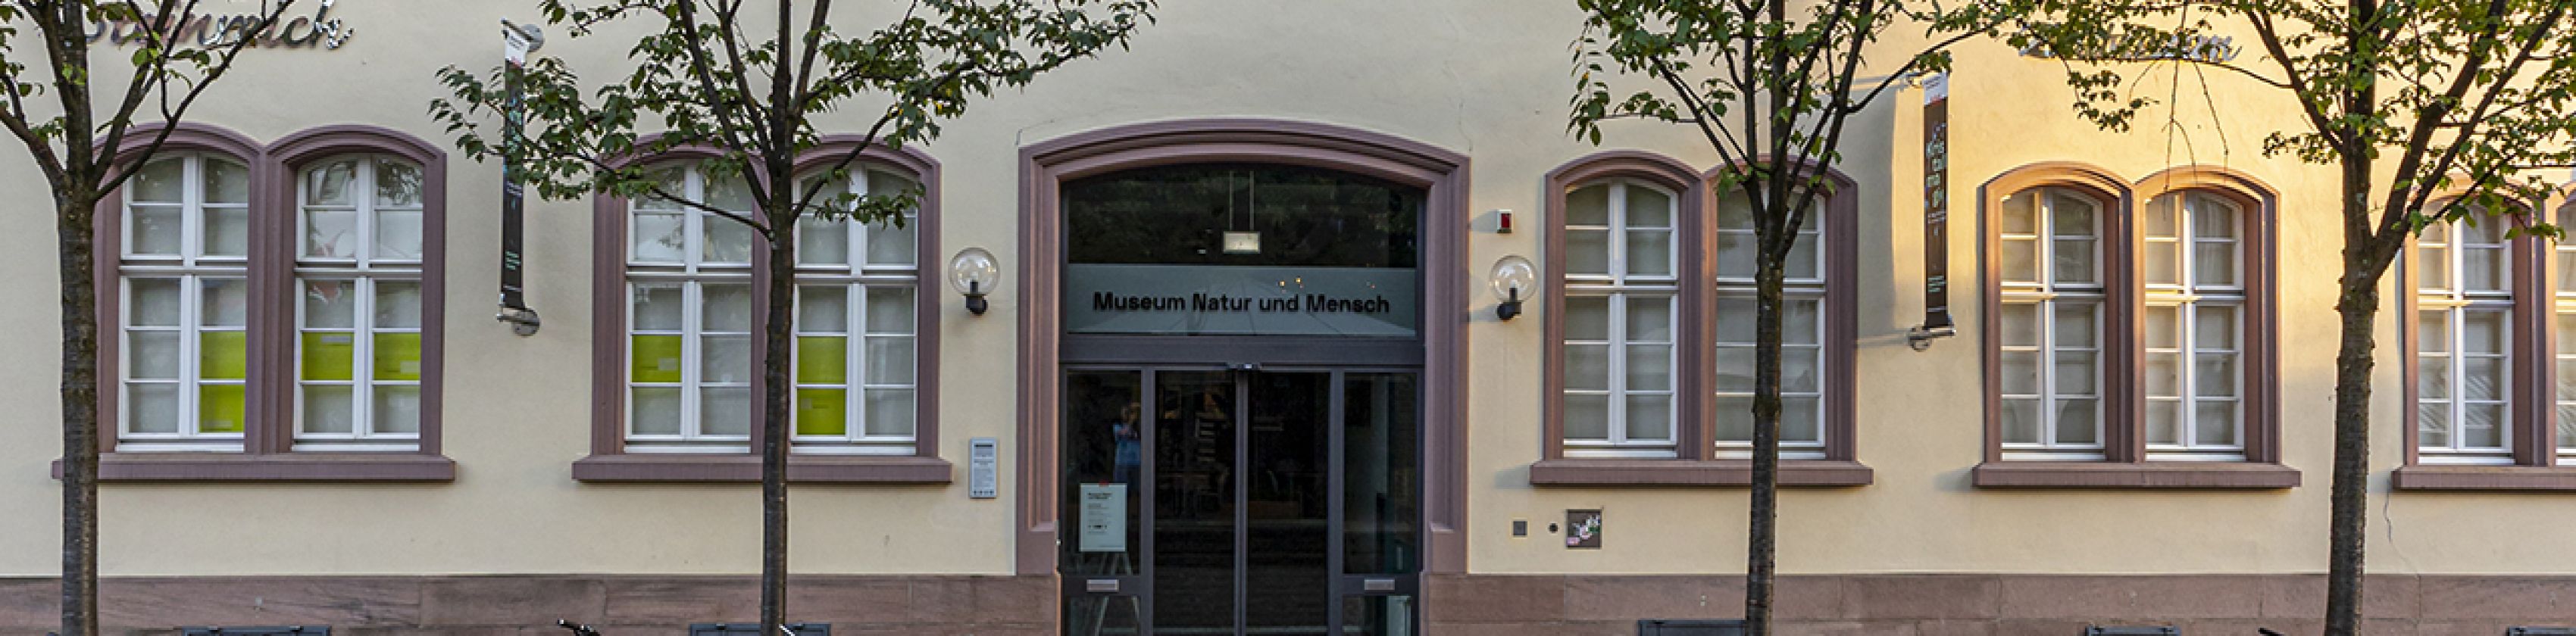 Museum-Natur-Mensch-FWTM-Spiegelhalter.3